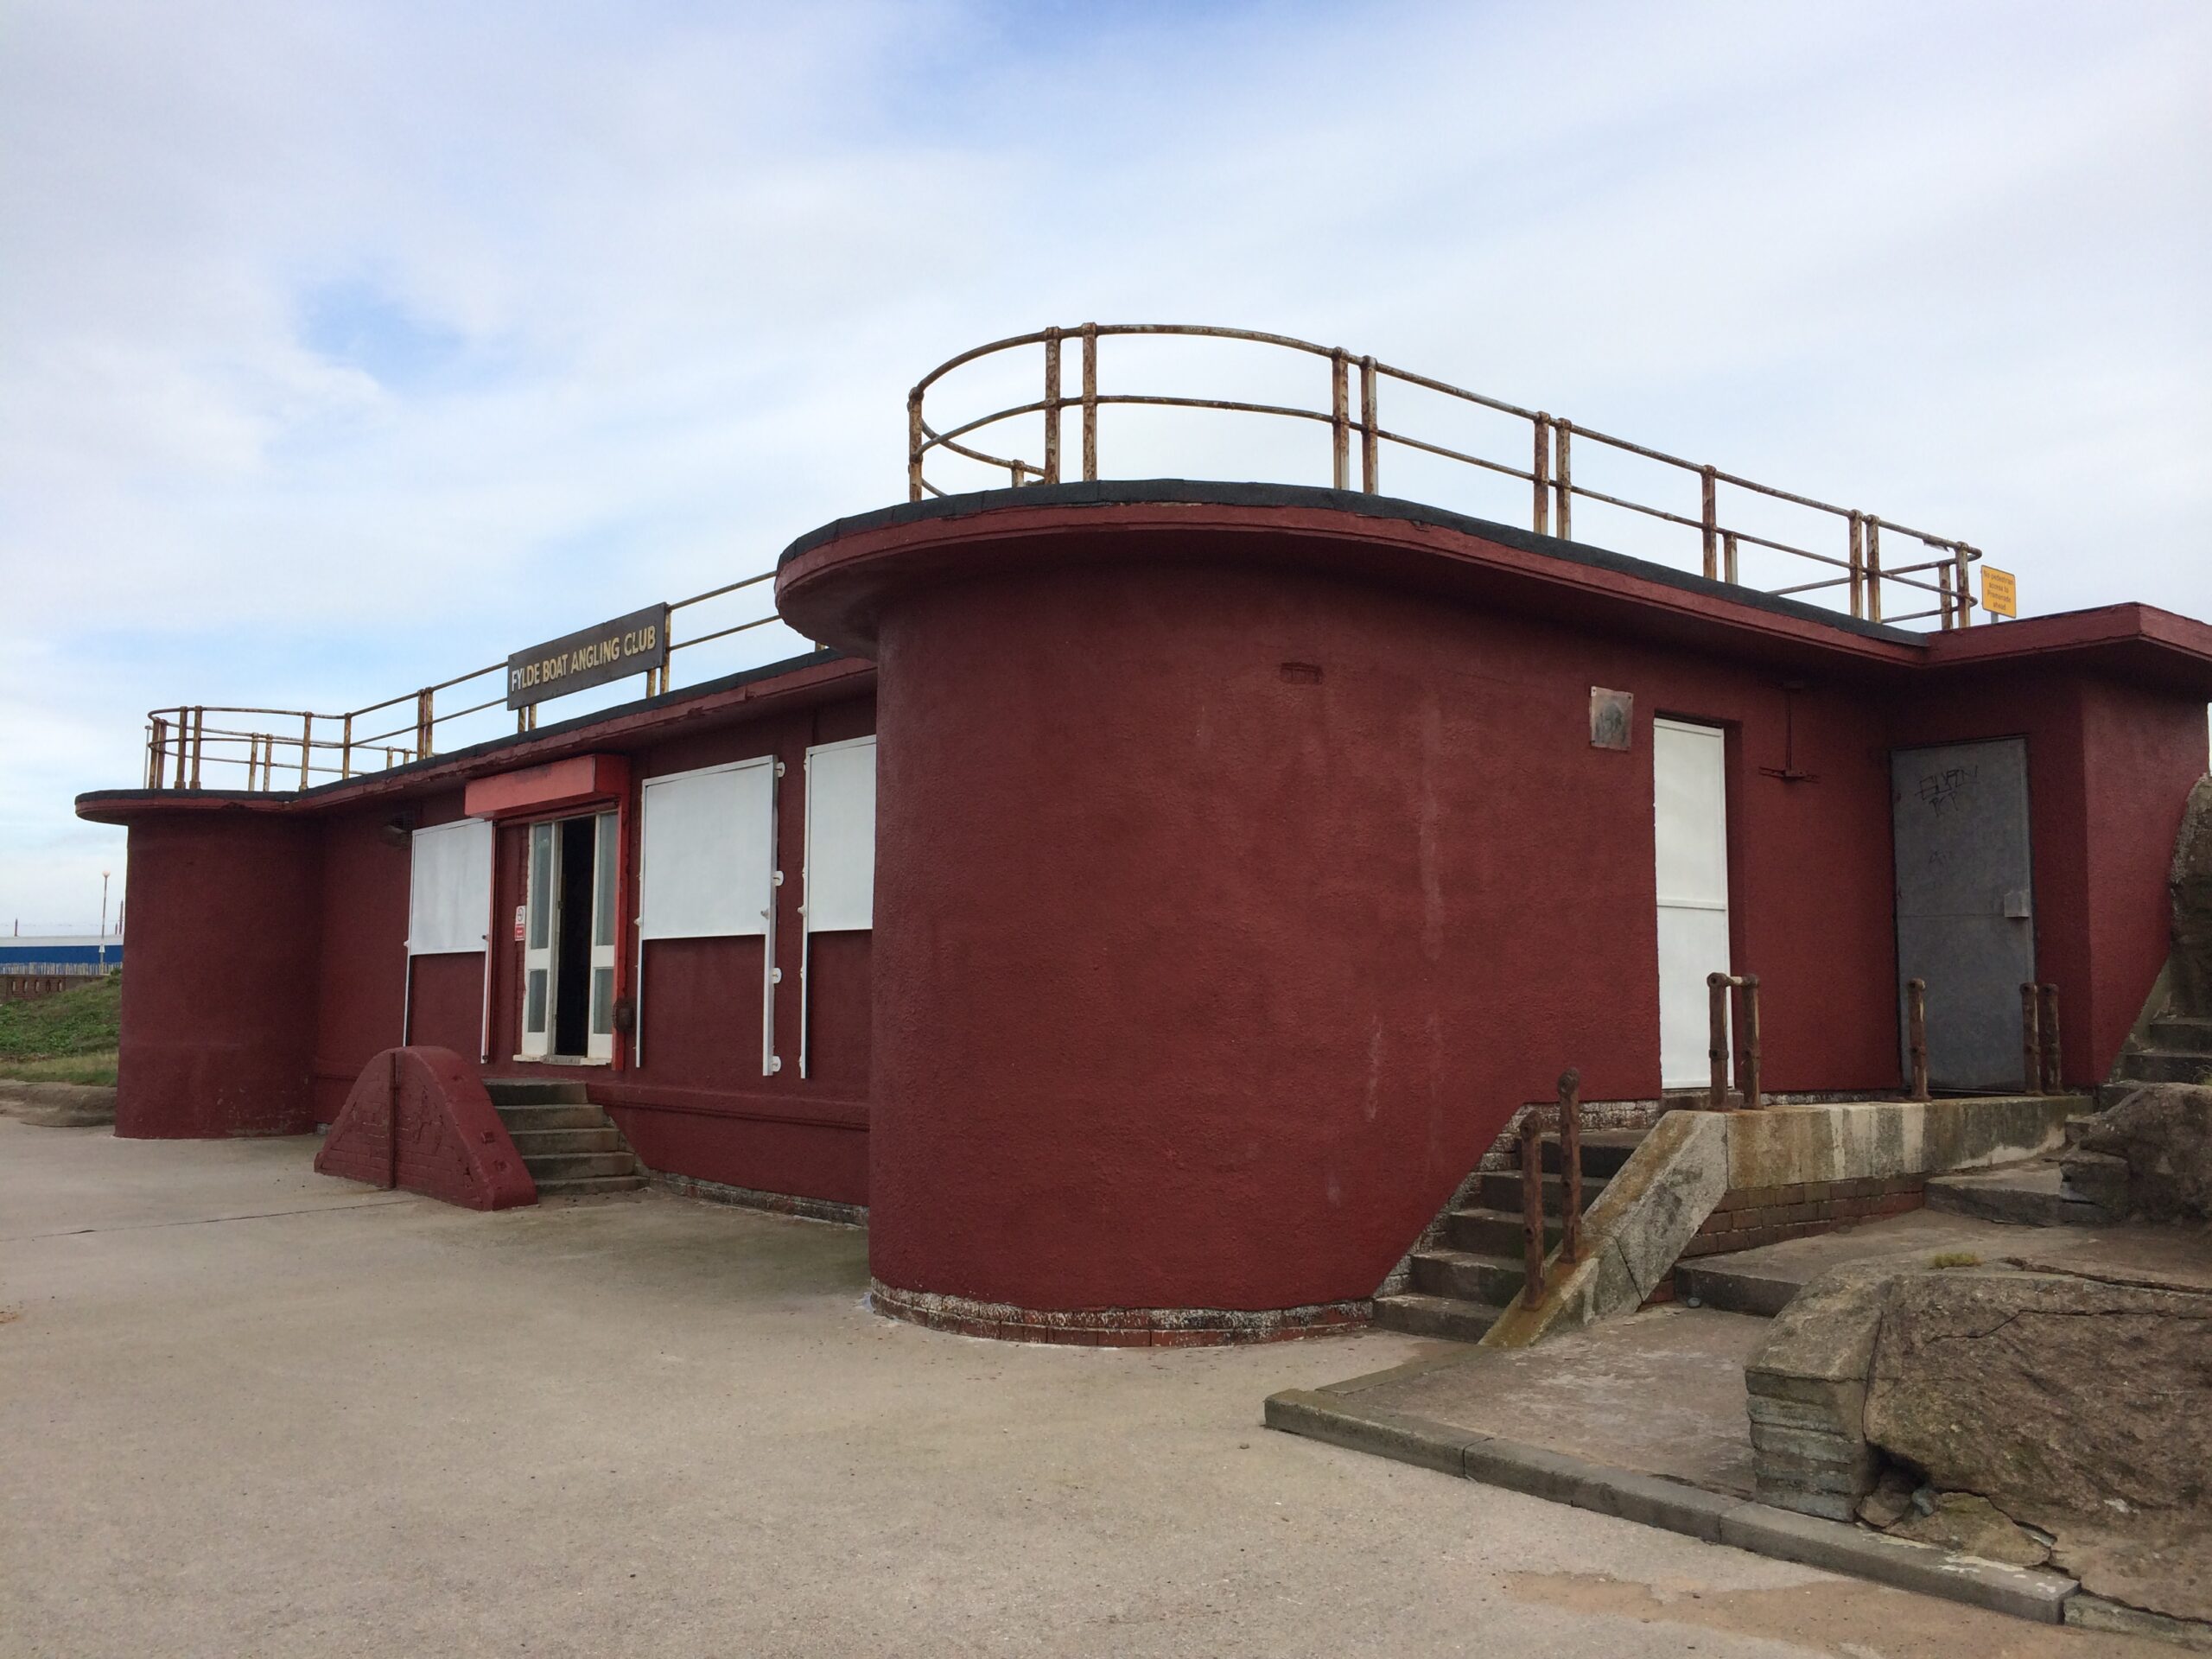 Fylde Boat Angling Club House, taken November 2014